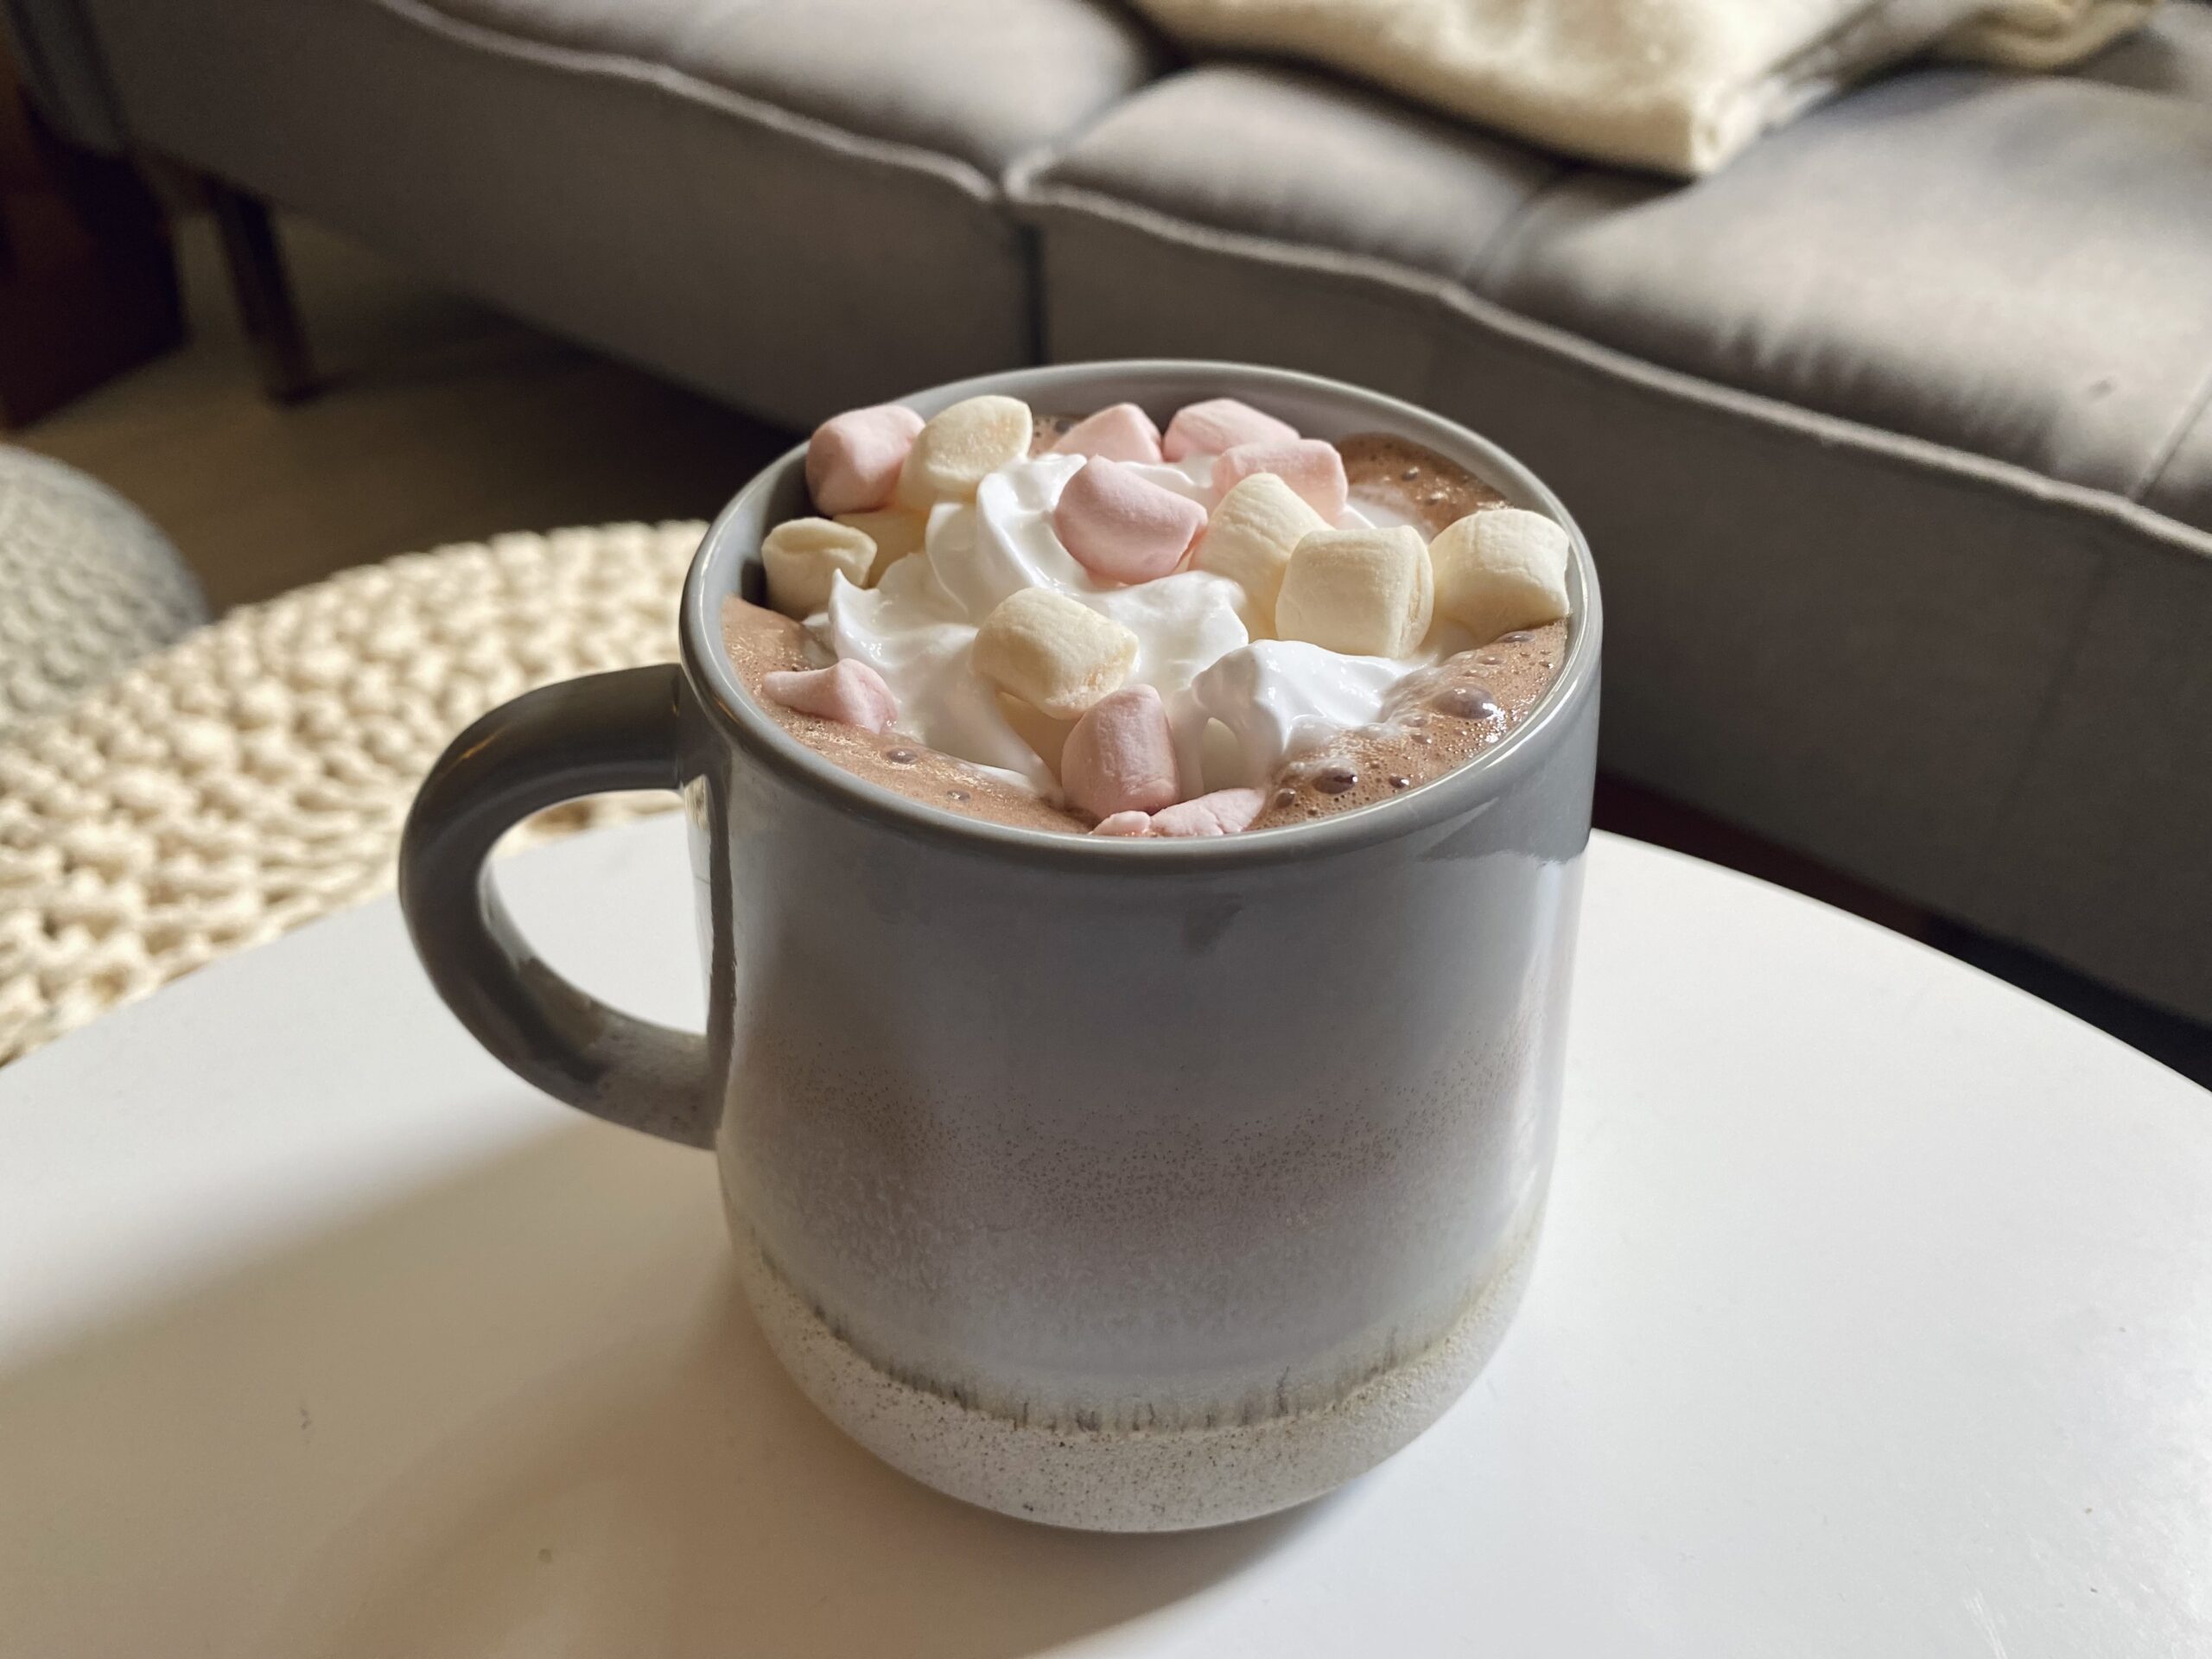 vegan hot chocolate with vegan whipped cream and marshmallows